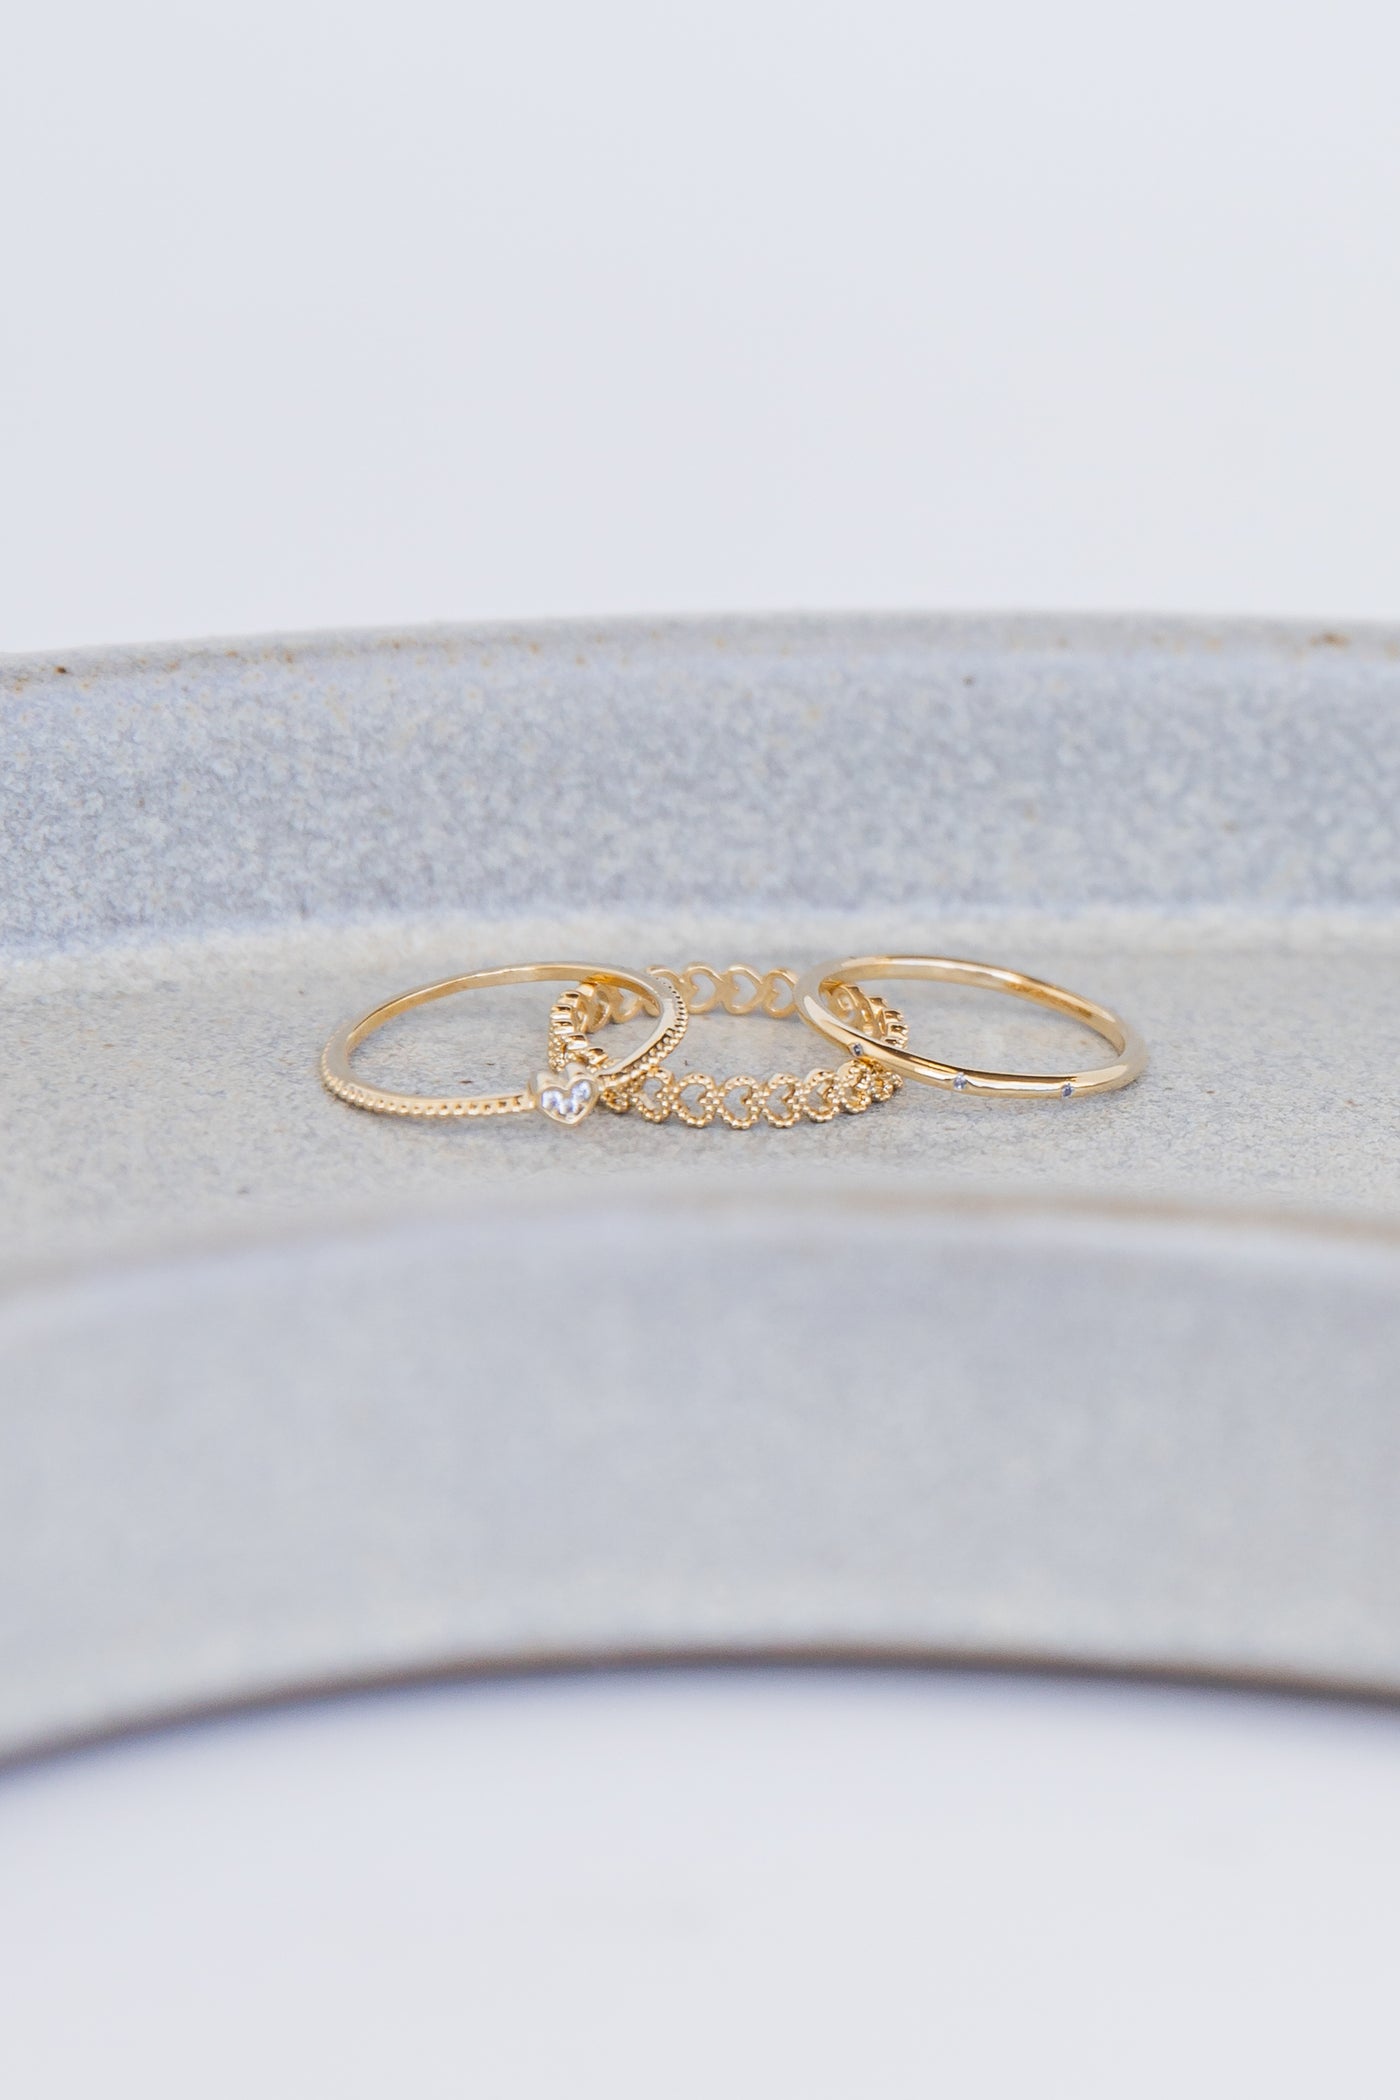 Gold Heart Ring Set close up